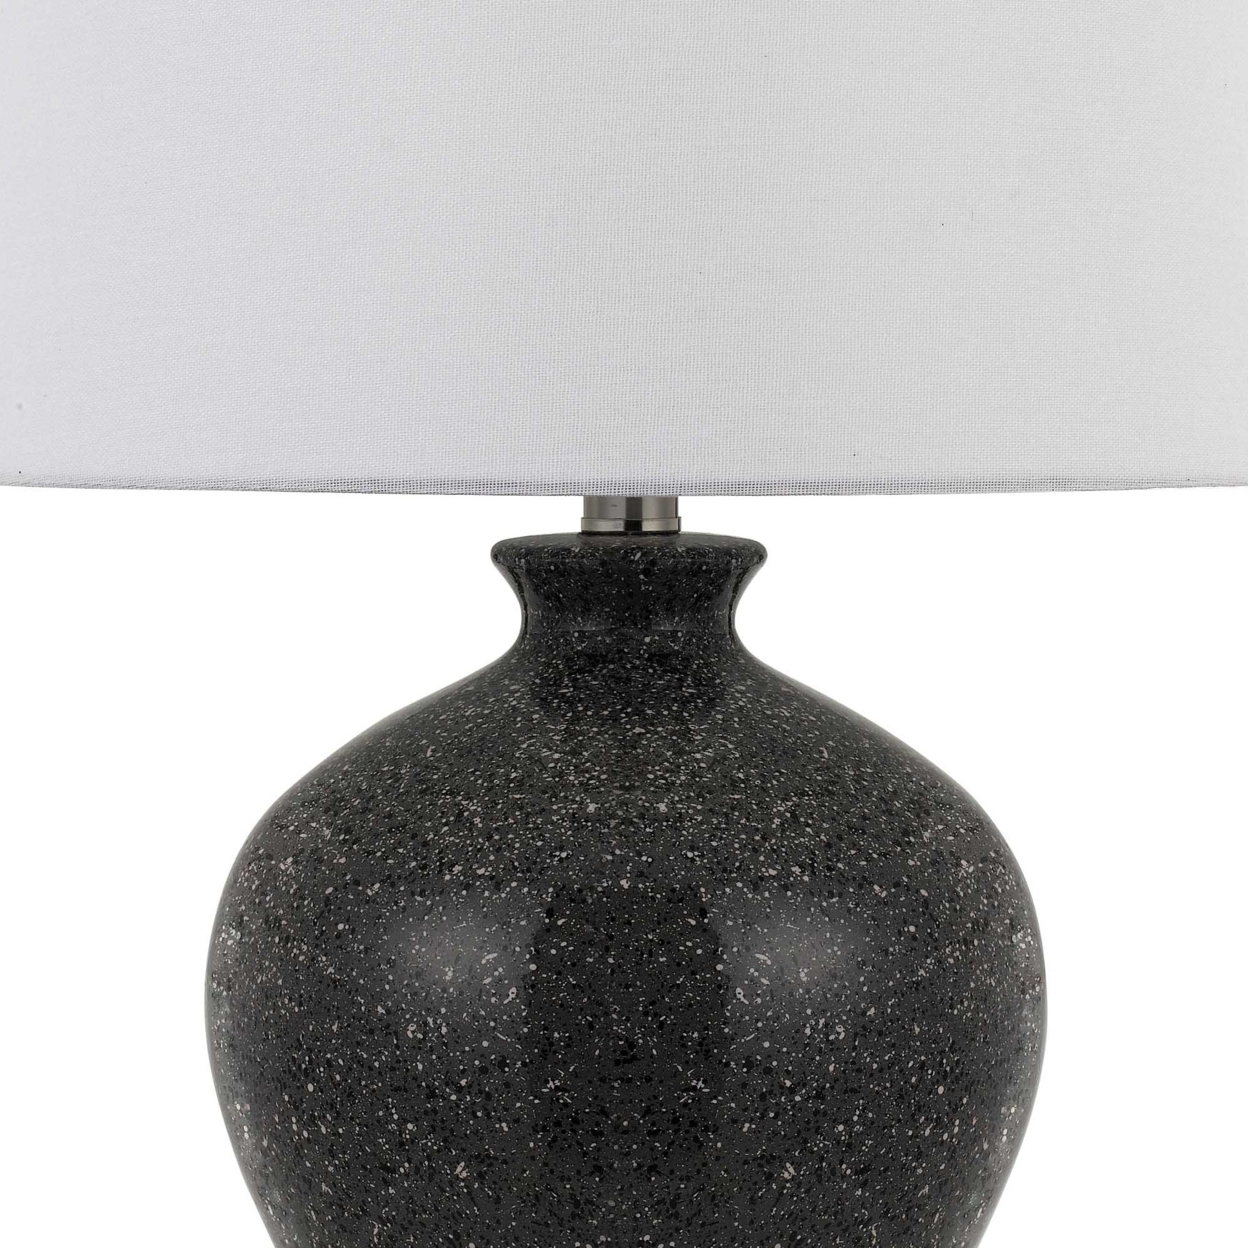 Ceramic Urn Shaped Base Table Lamp With Speckles, Set Of 2, Black- Saltoro Sherpi